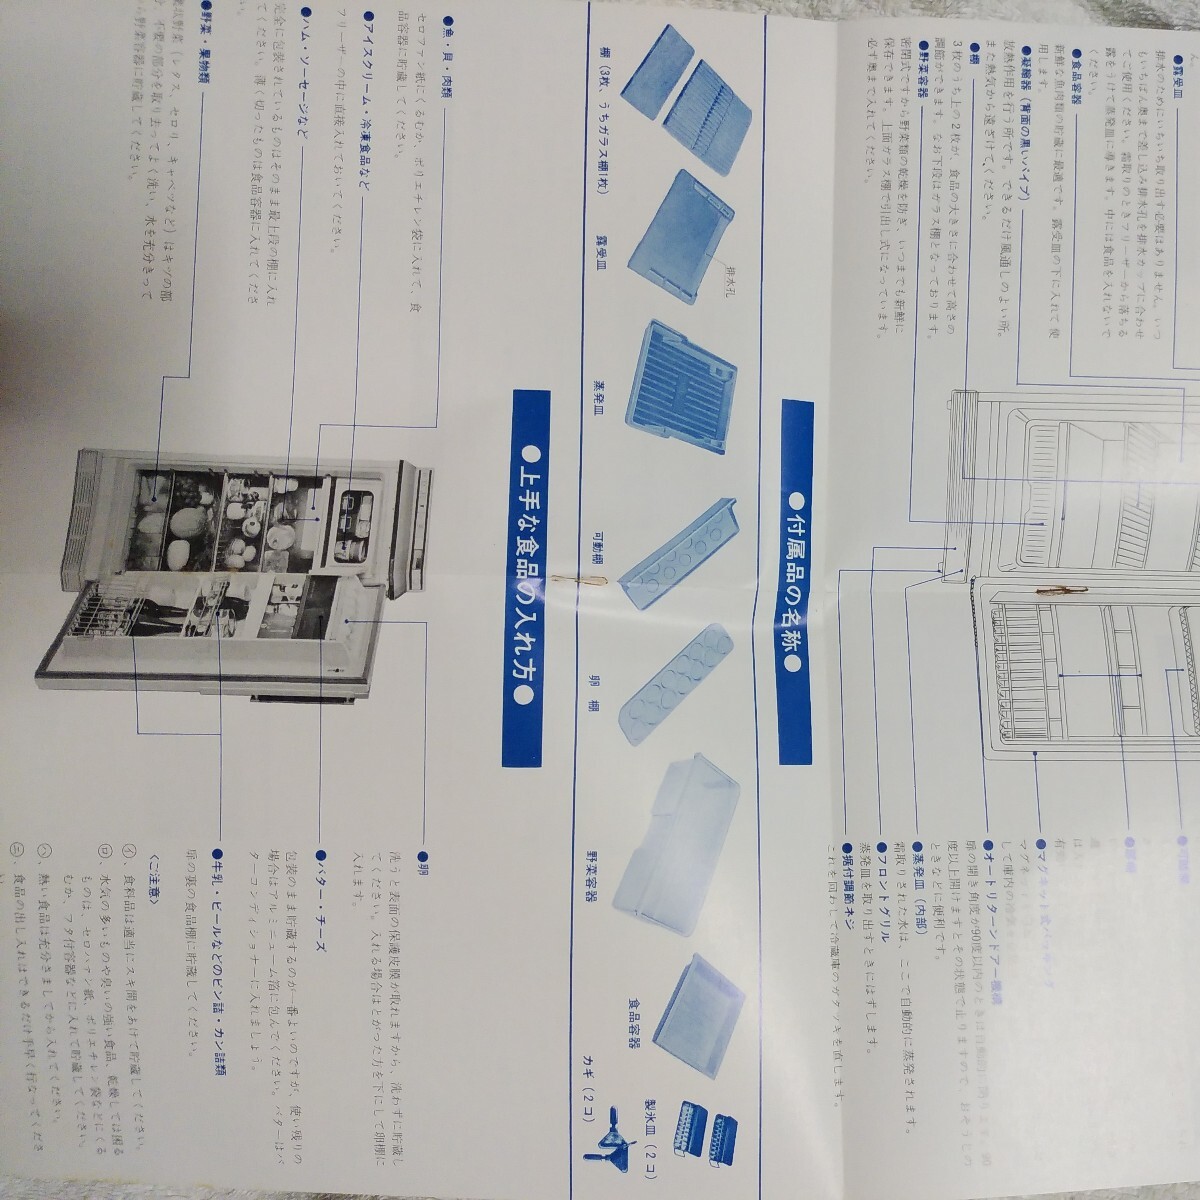  Showa Retro li машина рефрижератор RS-110 использование инструкция цена . письменная гарантия комплект 